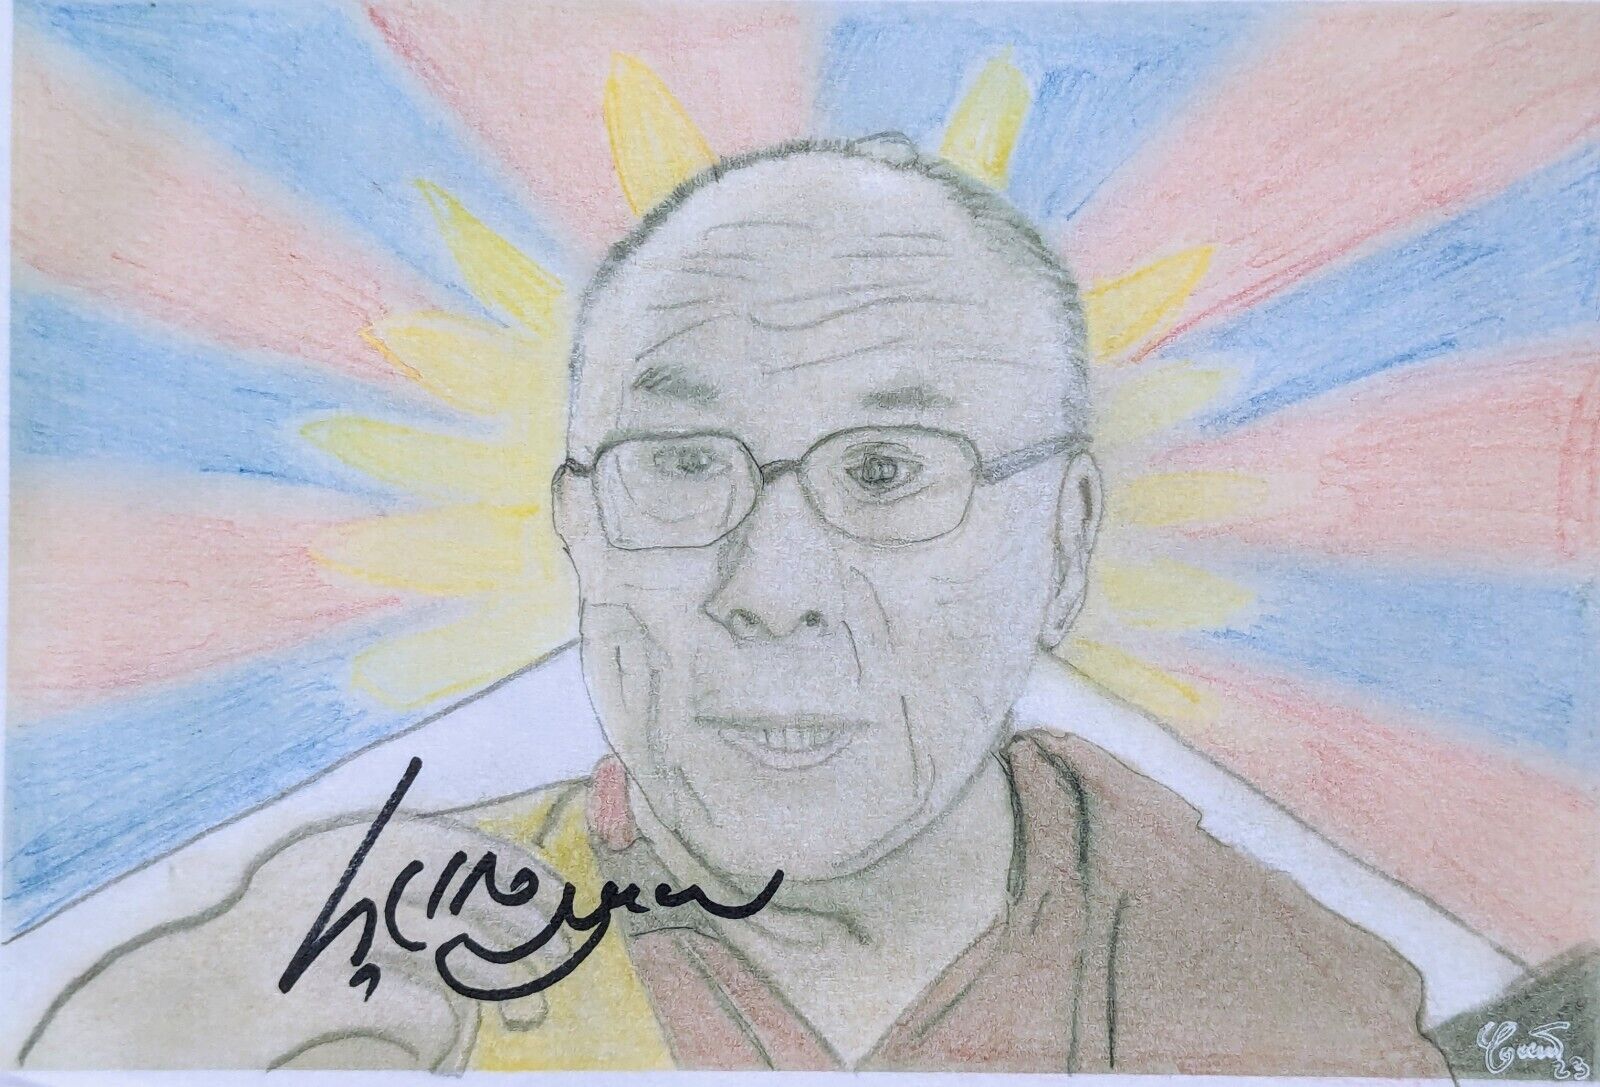 Dalai Lama Autograph Signed Photo PSA DNA Full Letter of Authenticity